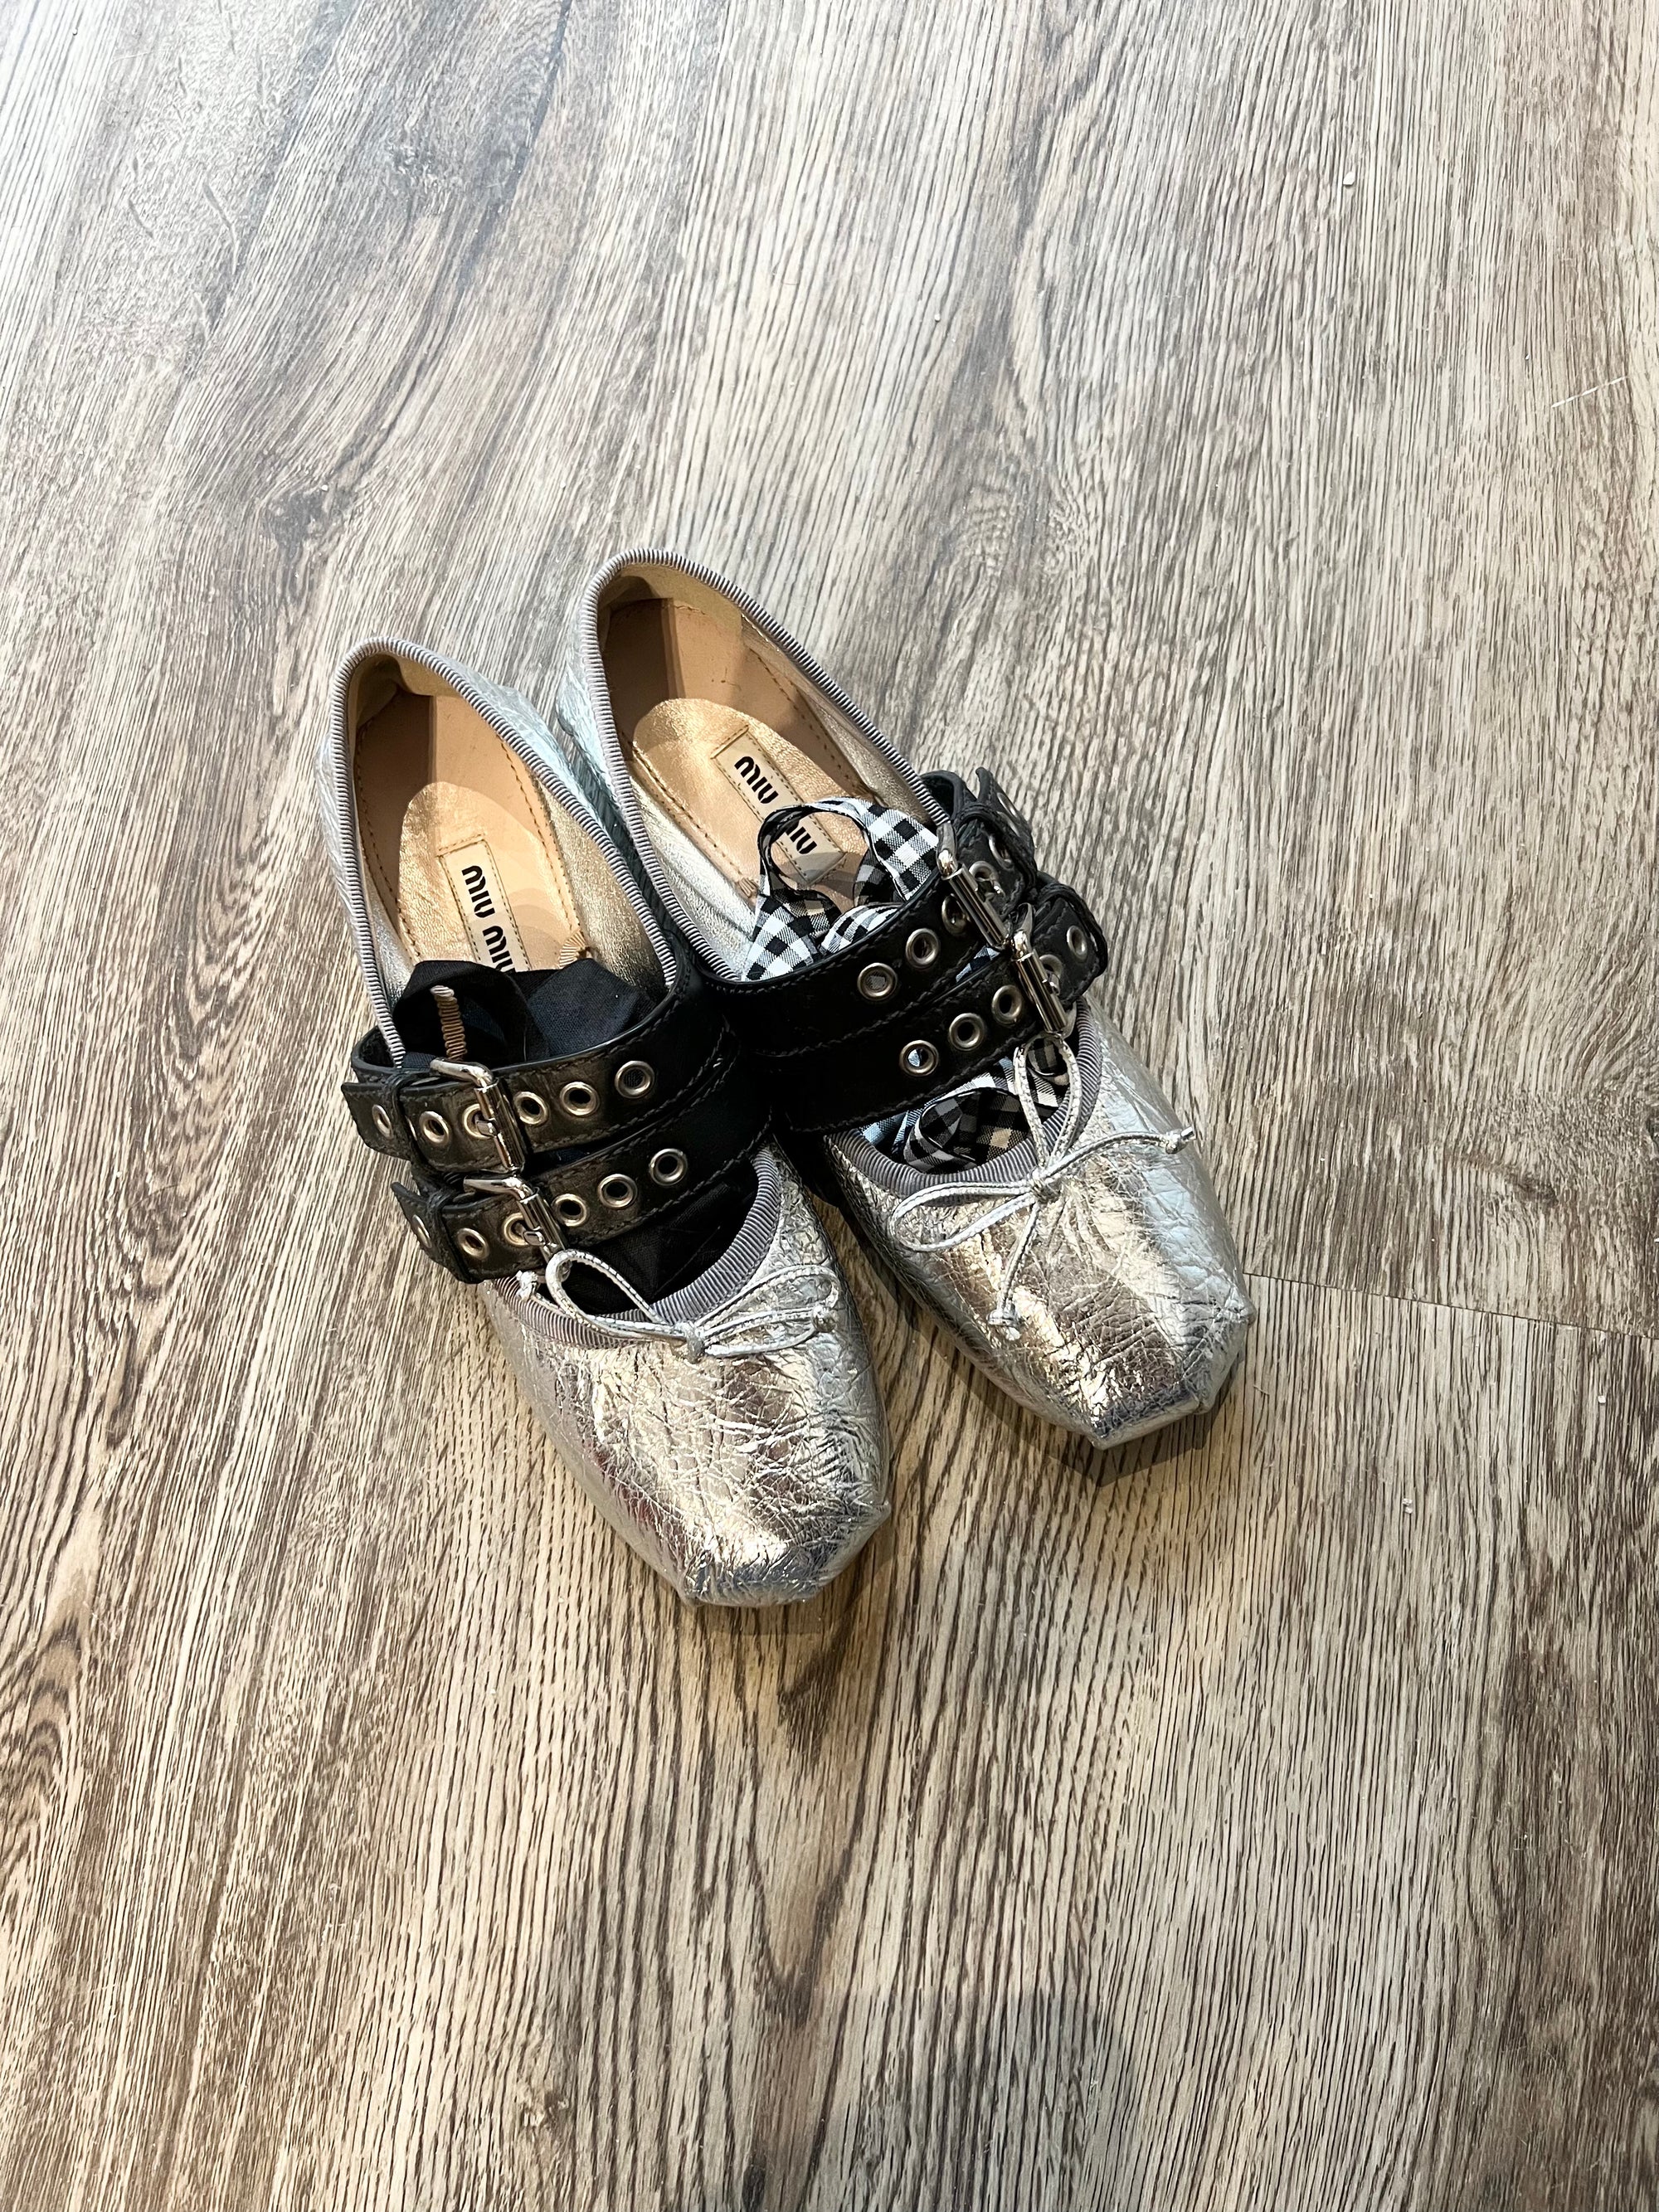 Miu Miu Naplak Ballerina Footwear, 37